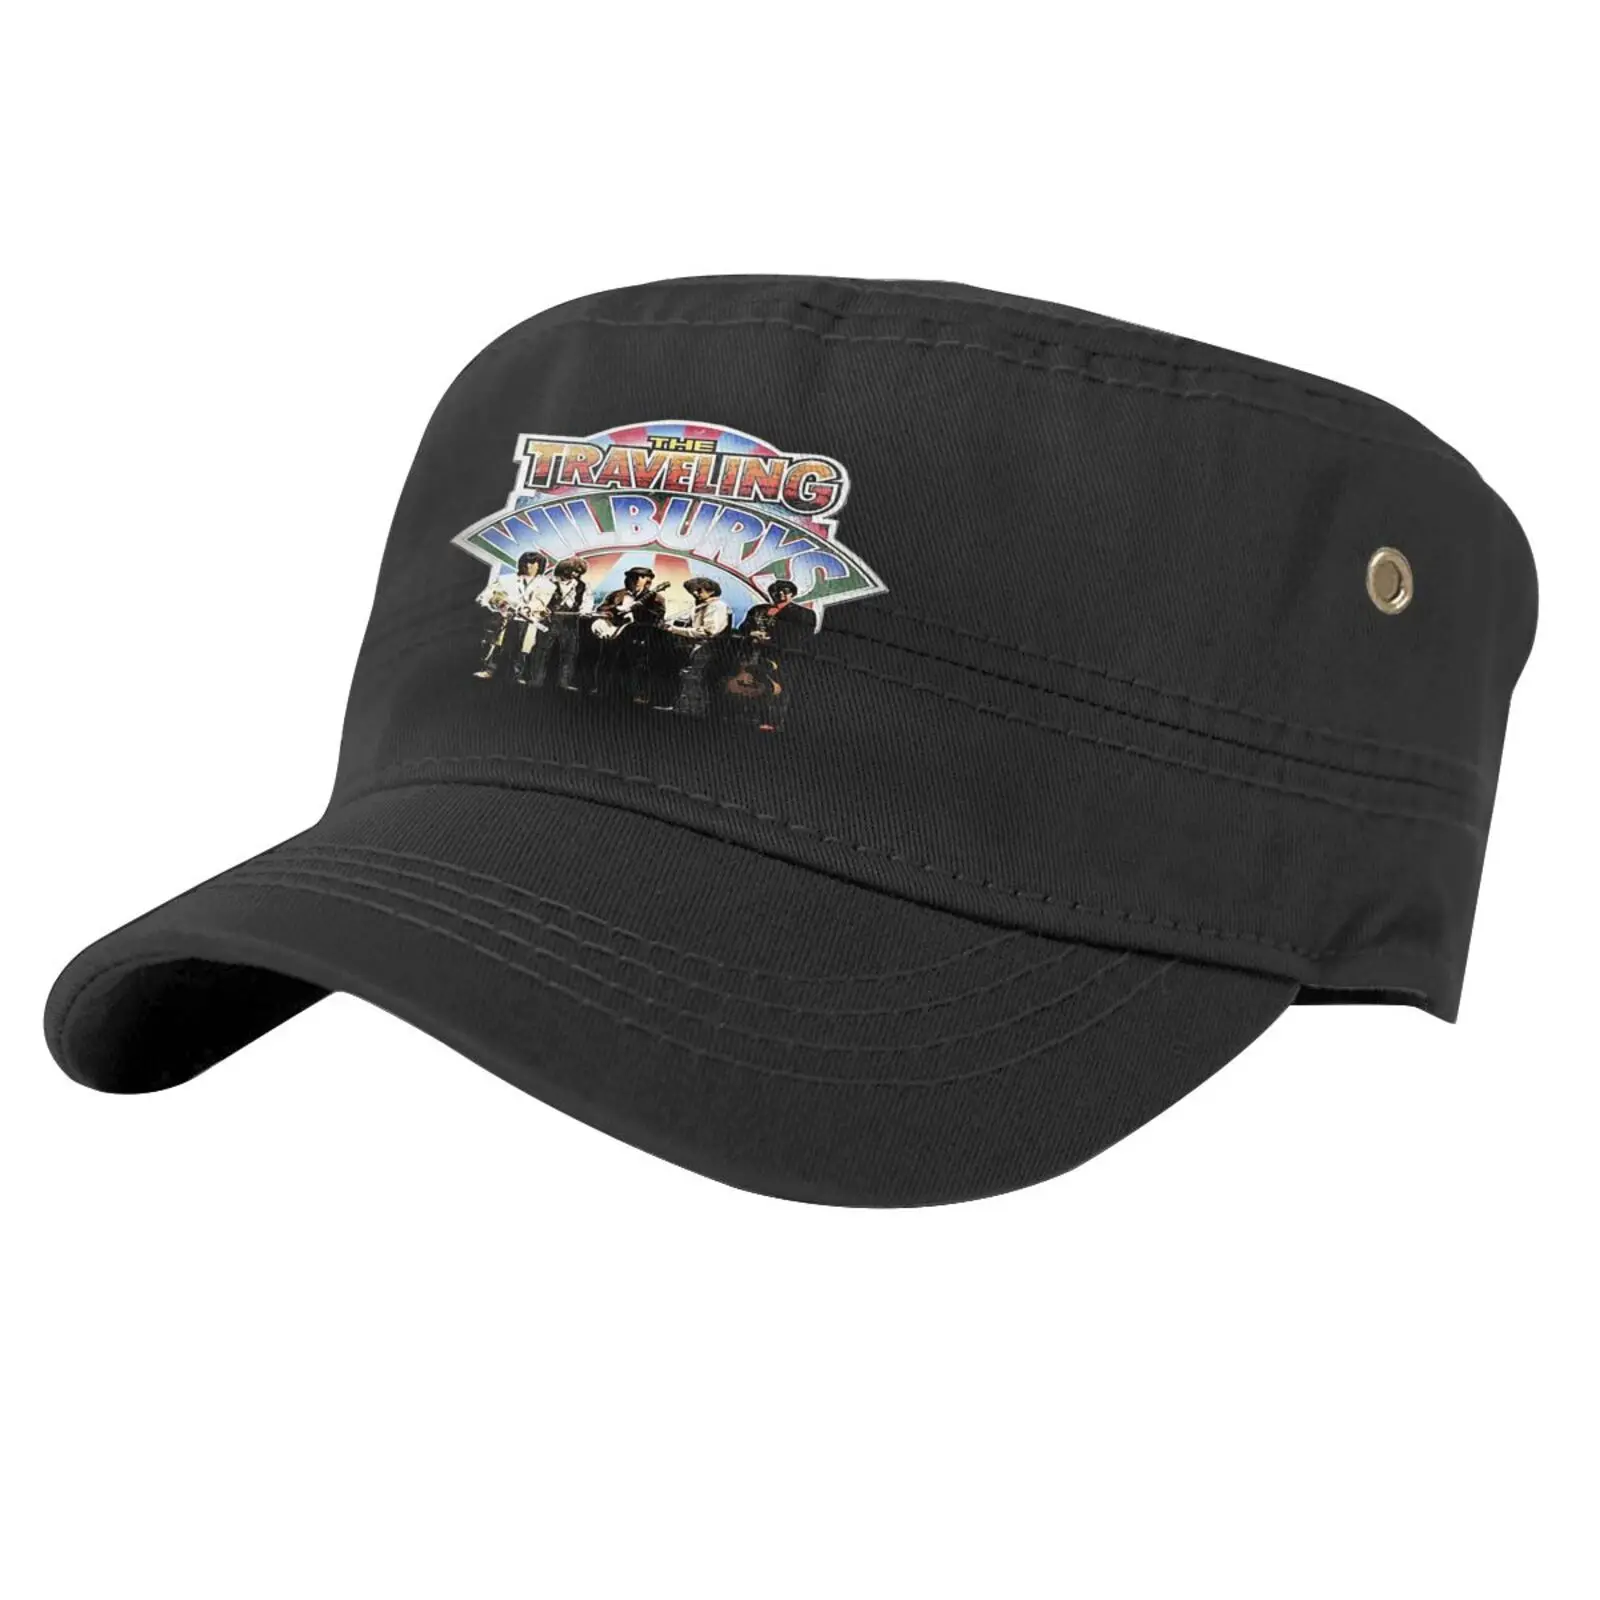 

Travelling Wilburys Group Shot Caps For Men Cap Male Men's Caps Men's Hats Brazil Custom Logo Hats For Men Hats Caps For Women